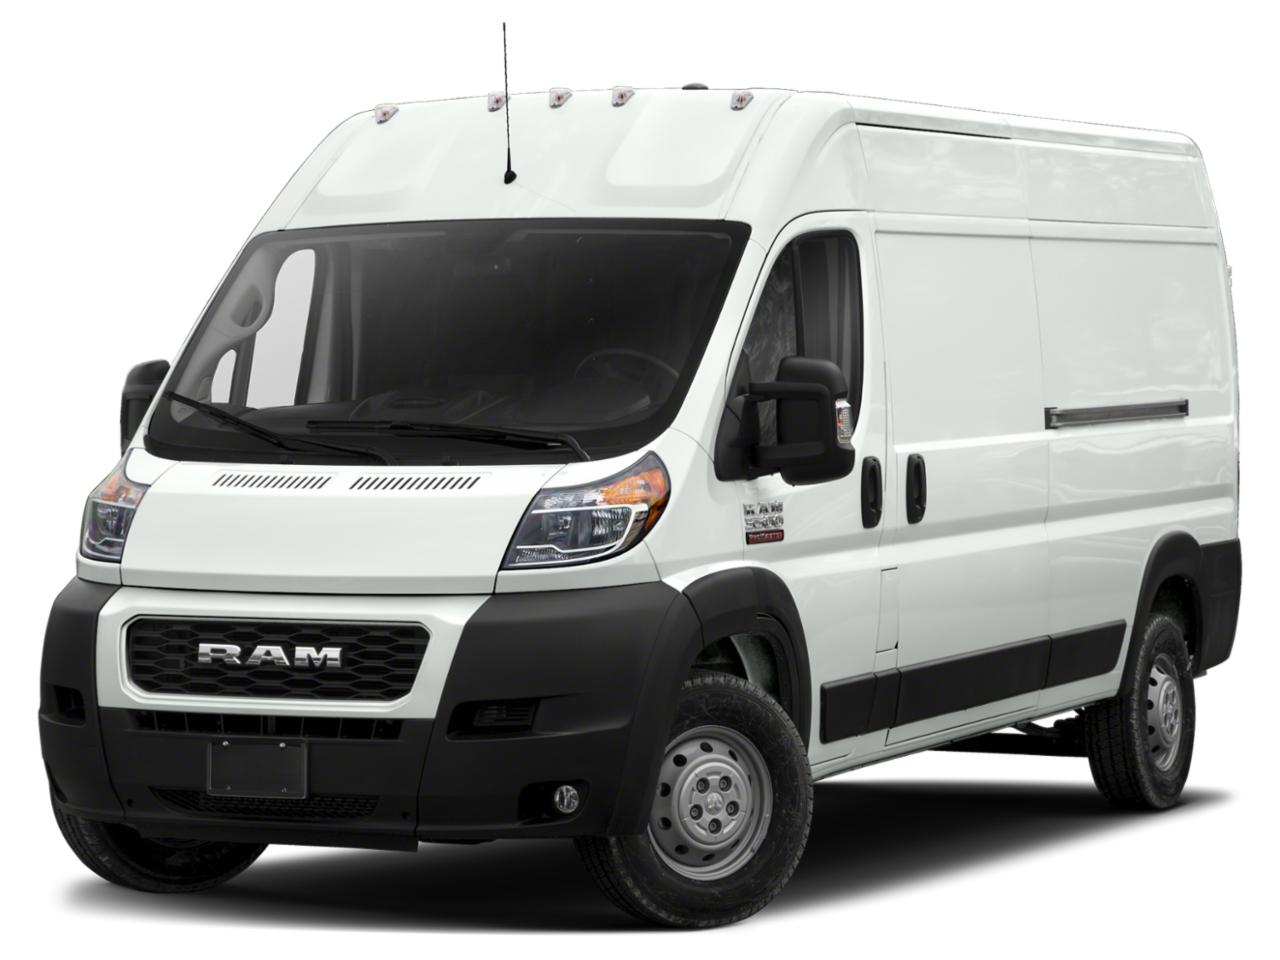 2021 Ram ProMaster Cargo Van Vehicle Photo in Saint Charles, IL 60174